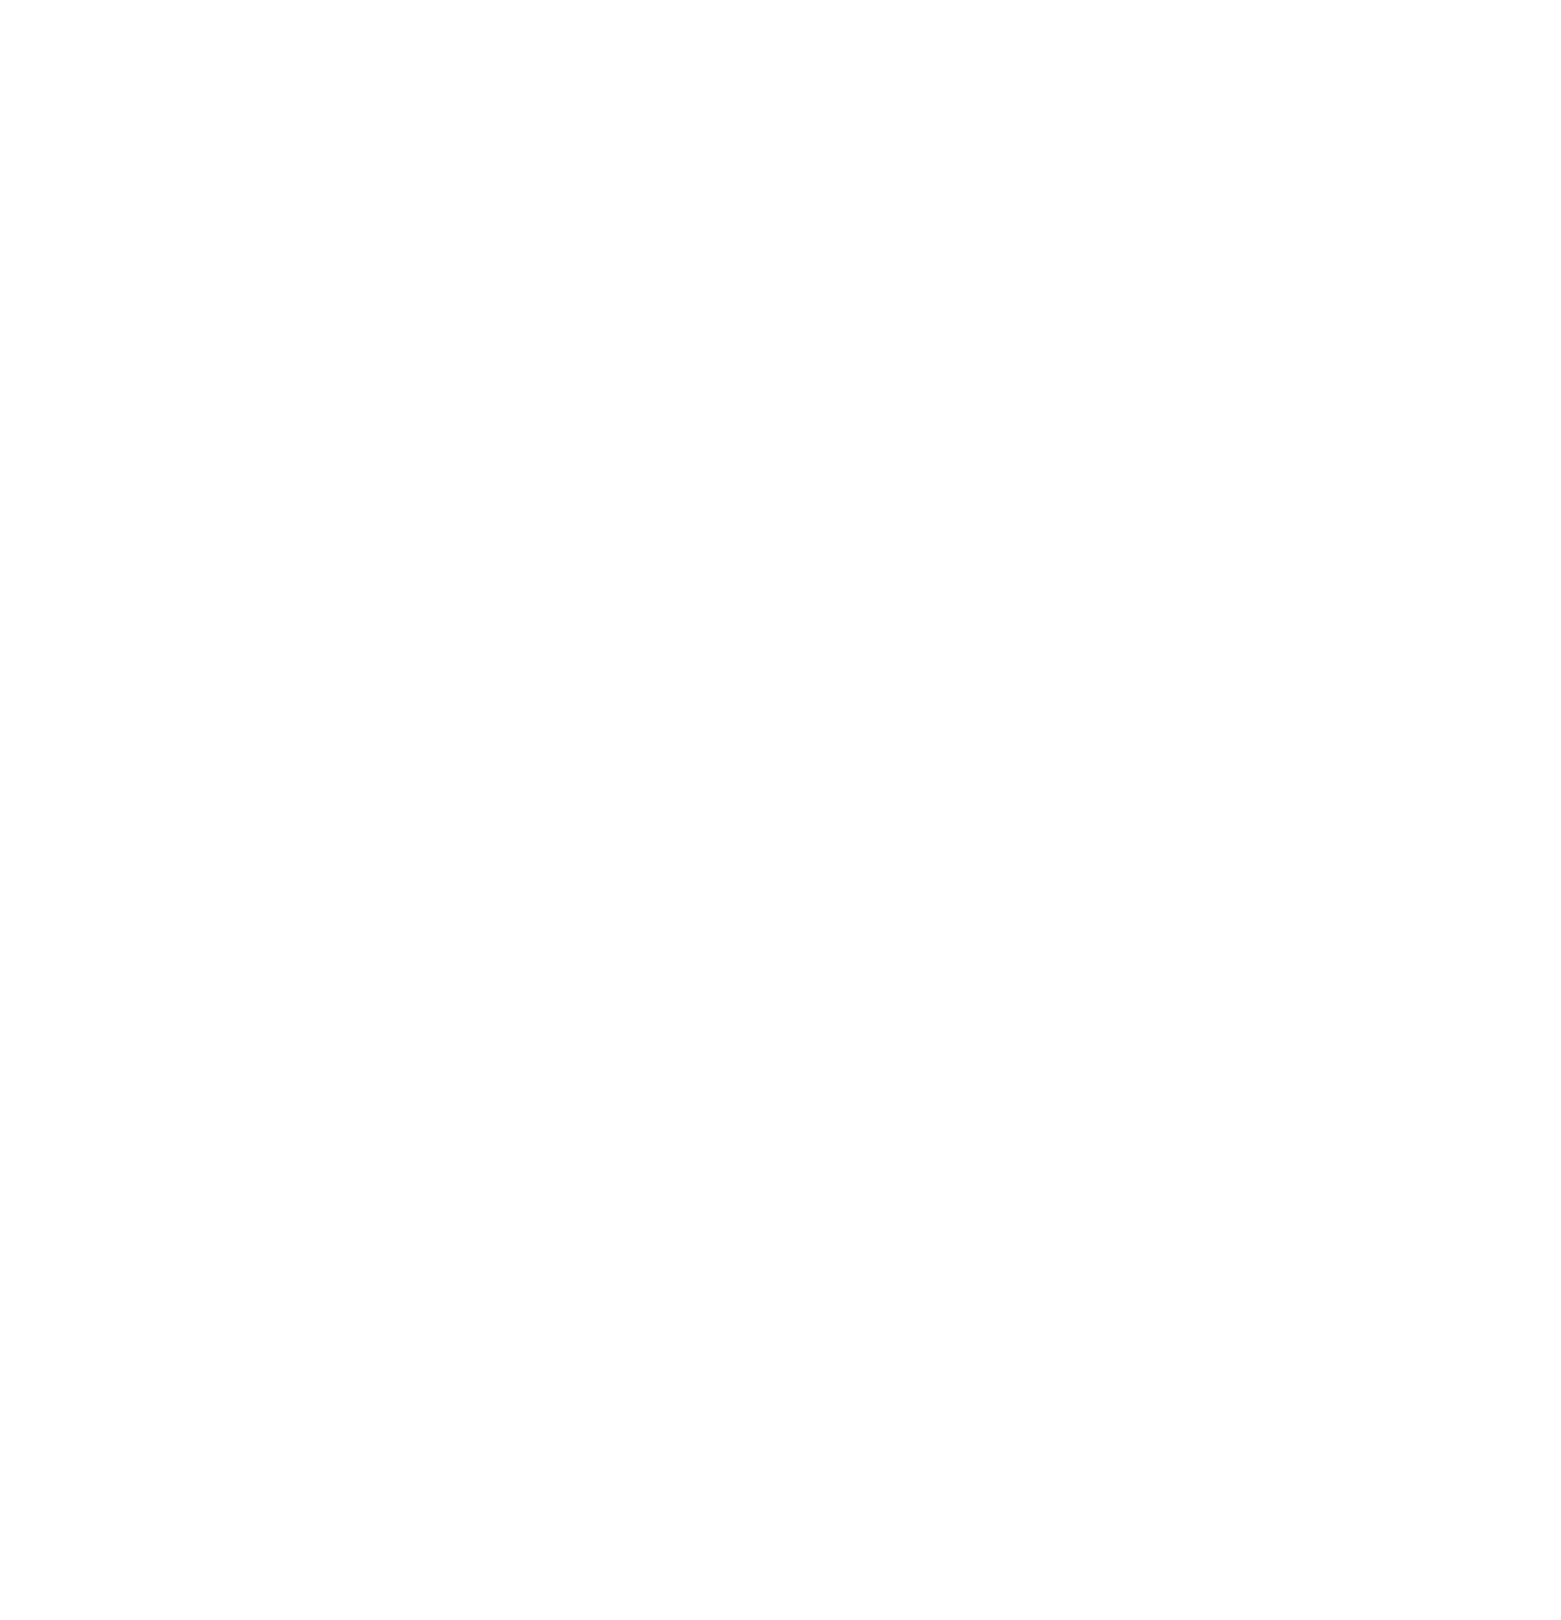 FirstCash logo pour fonds sombres (PNG transparent)